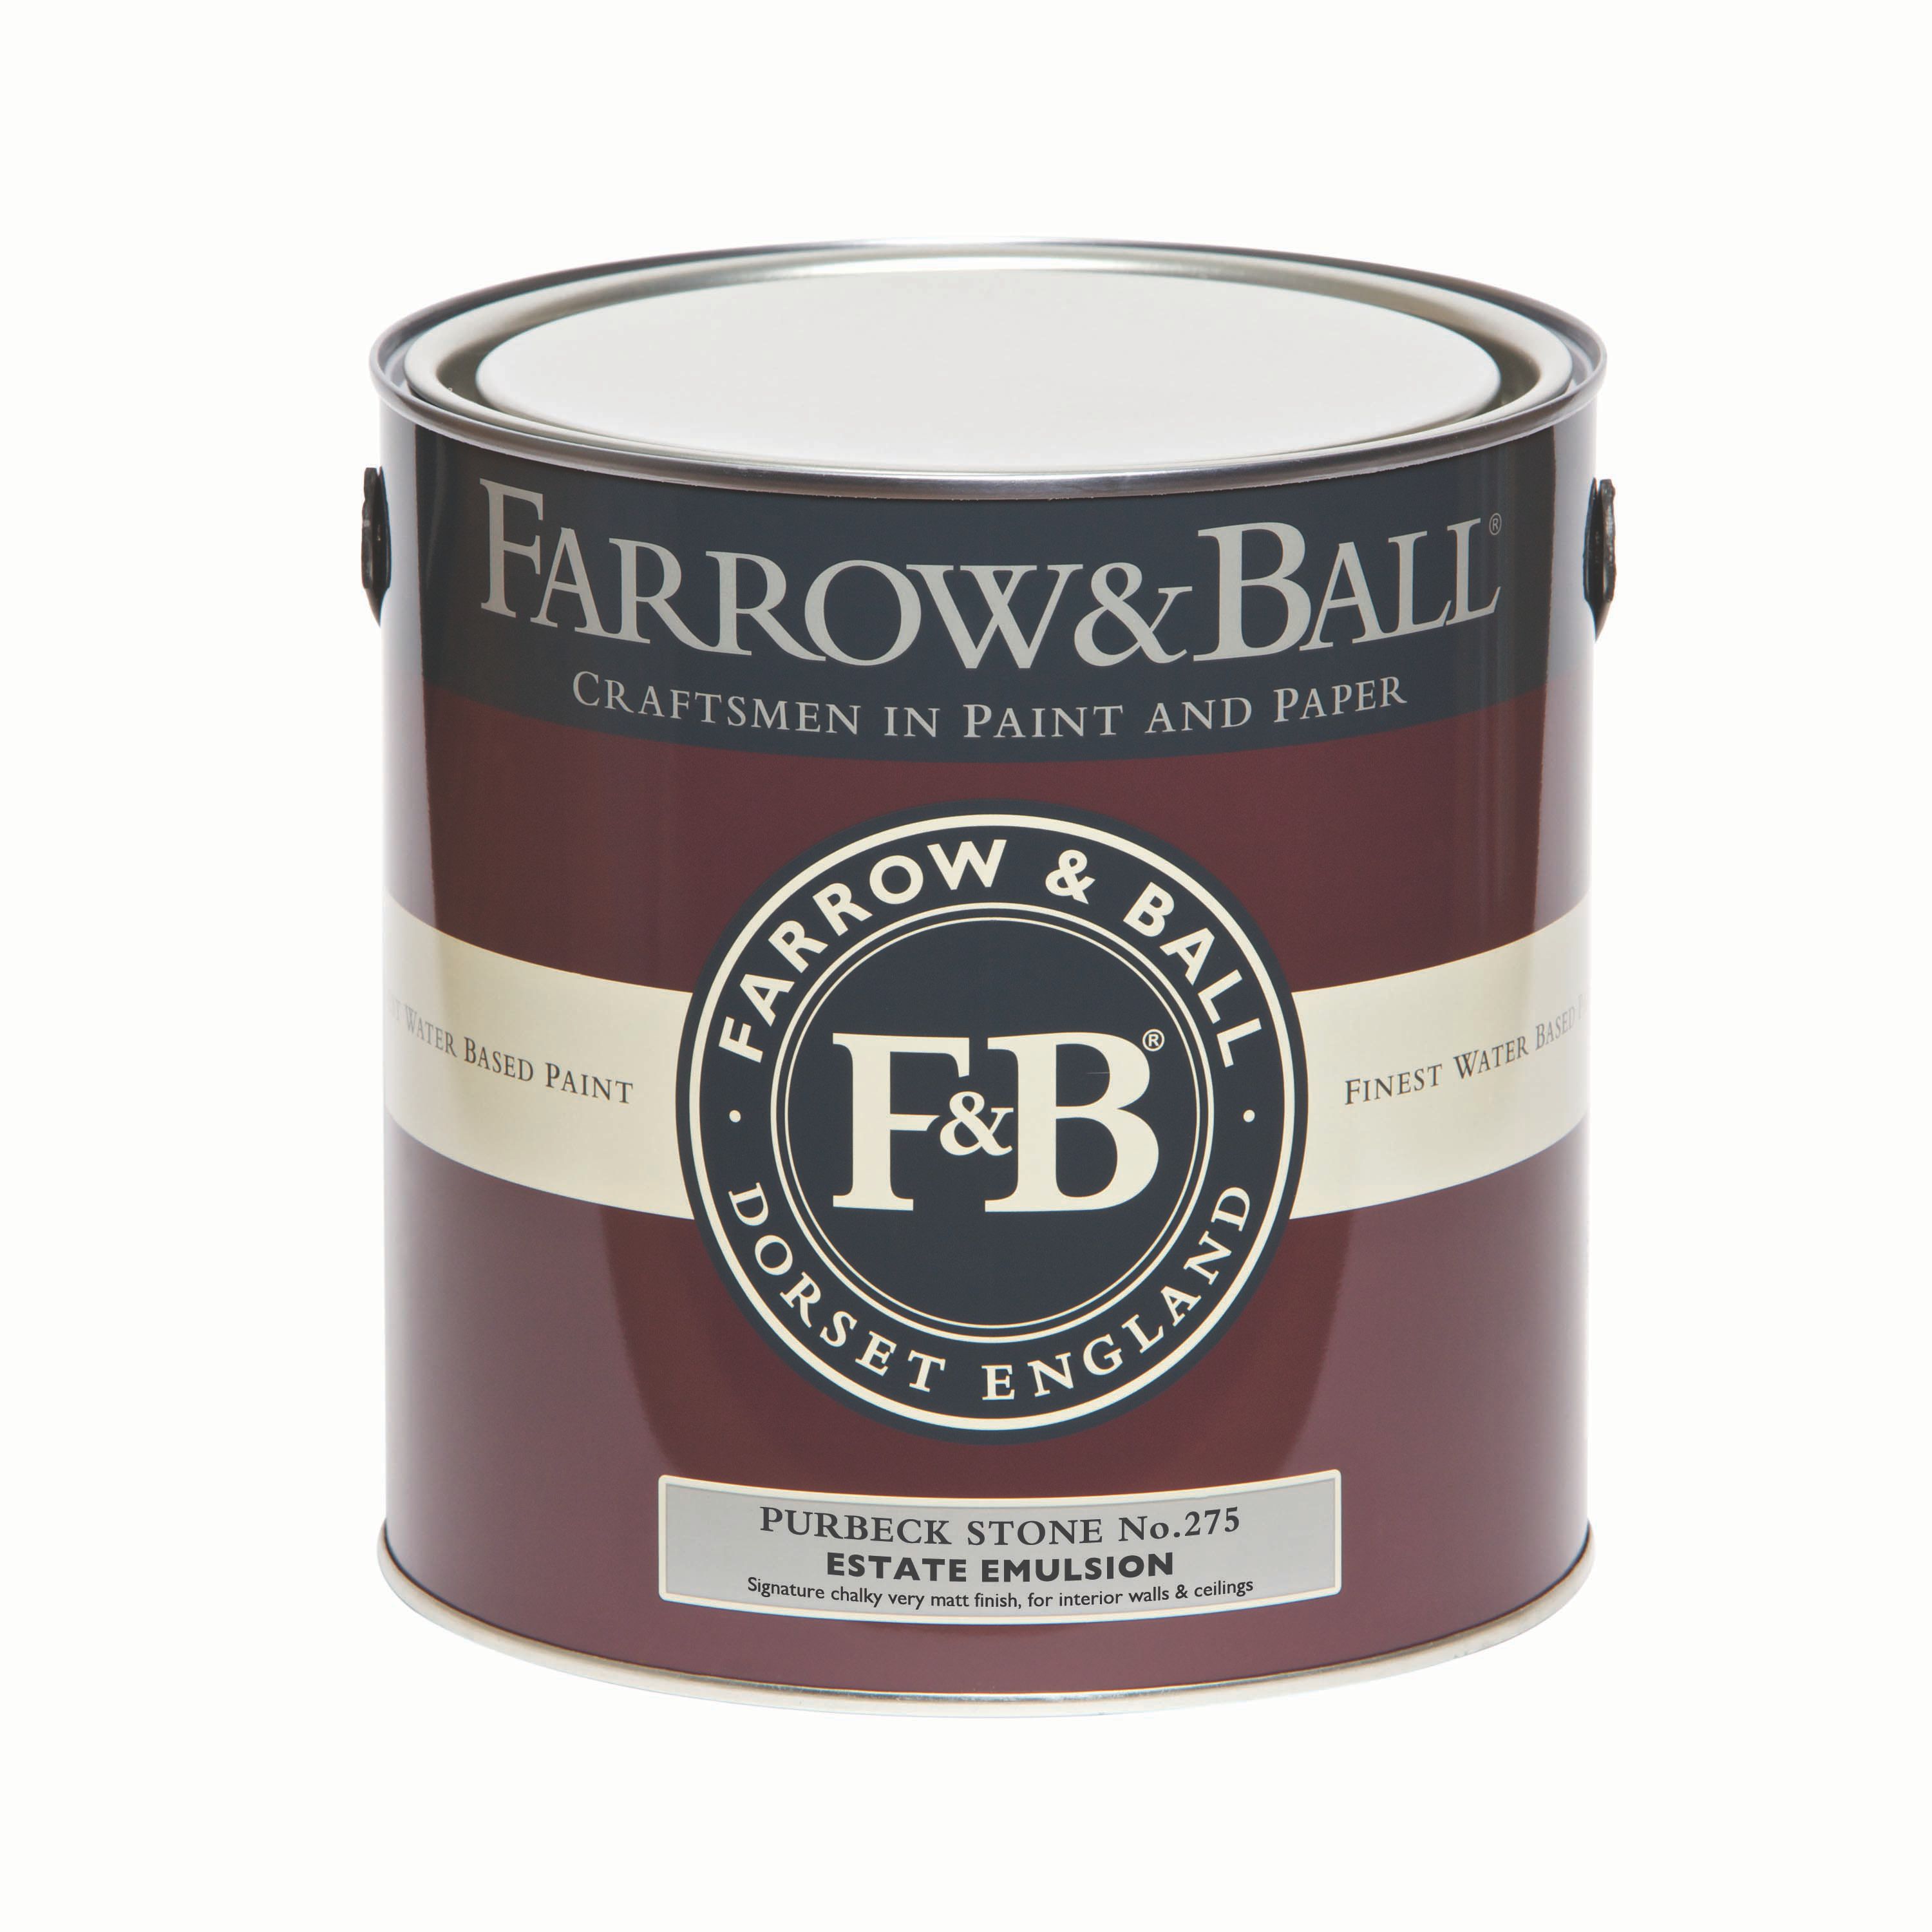 Farrow & Ball Estate Purbeck stone No.275 Matt Emulsion paint, 2.5L